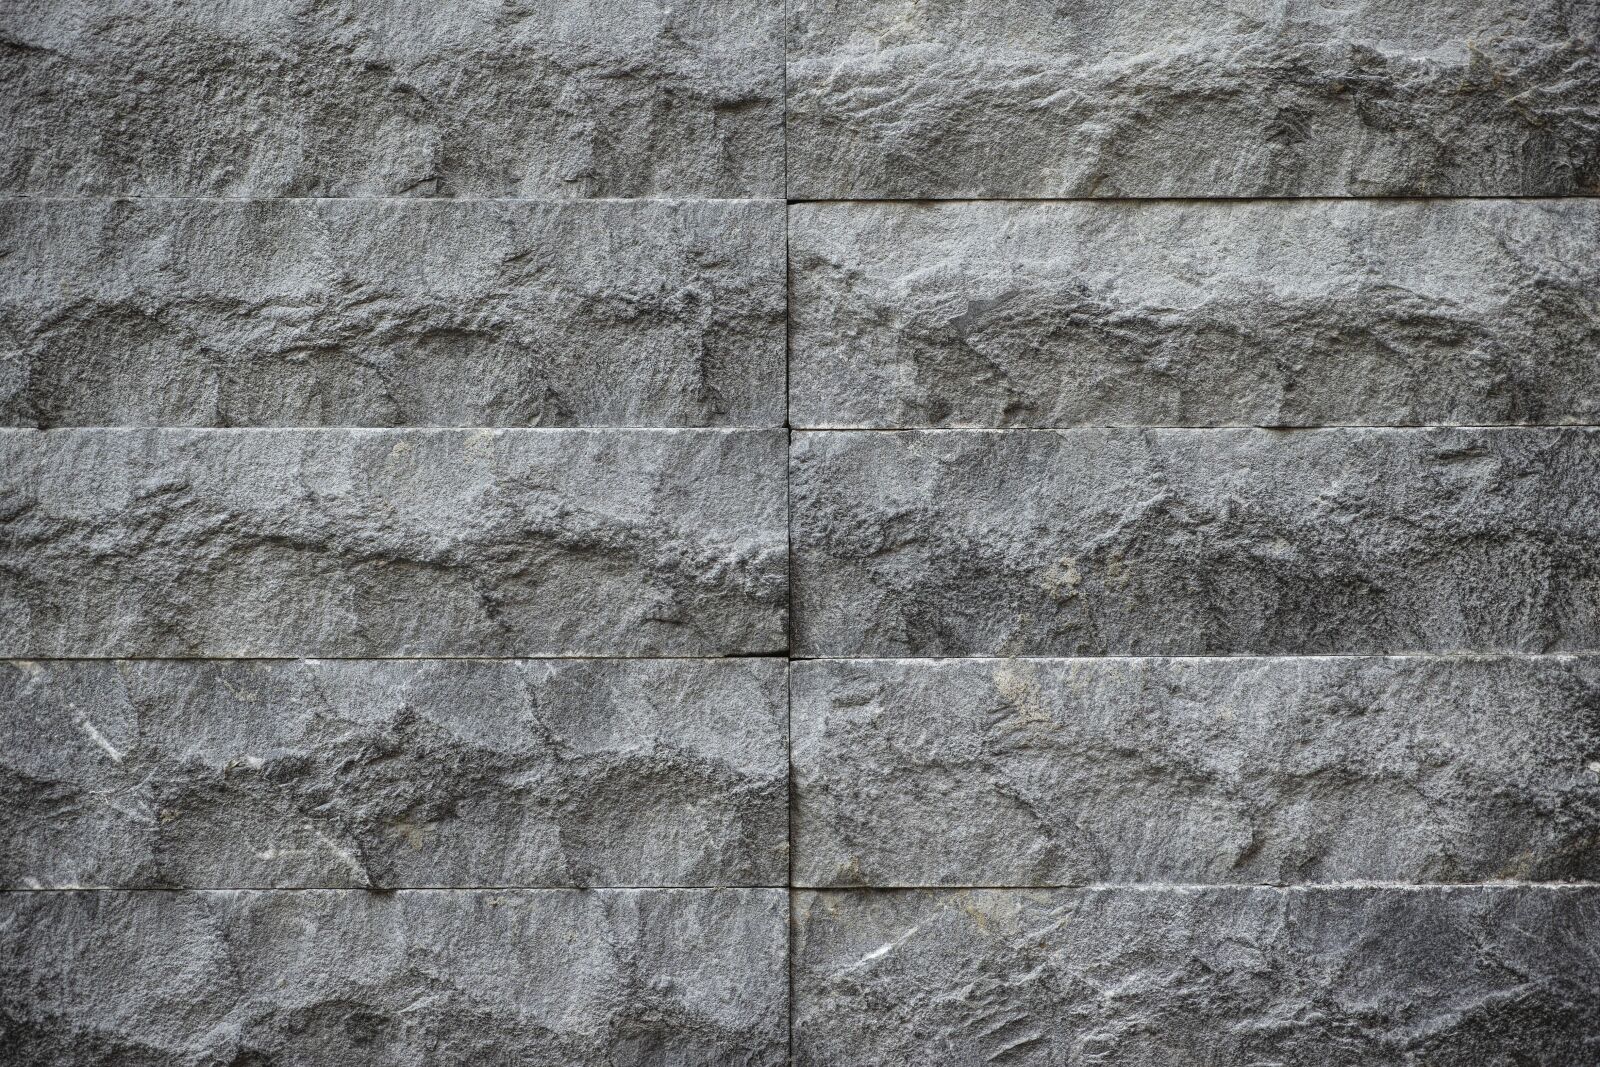 Sigma DP3 Merrill sample photo. Wall, granite, texture photography